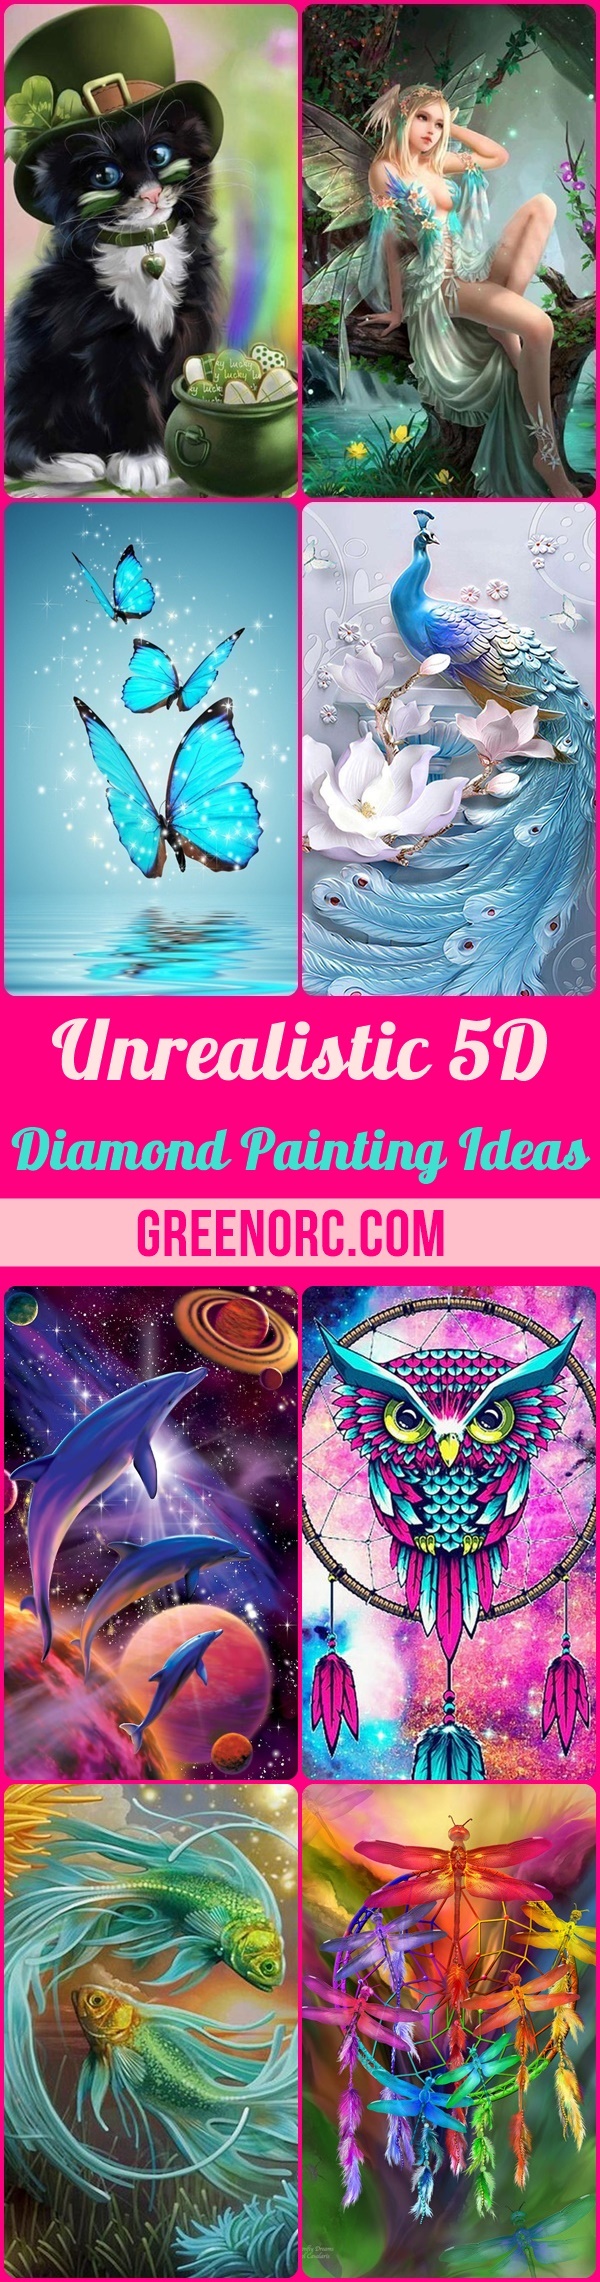 Unrealistic 5D Diamond Painting Ideas